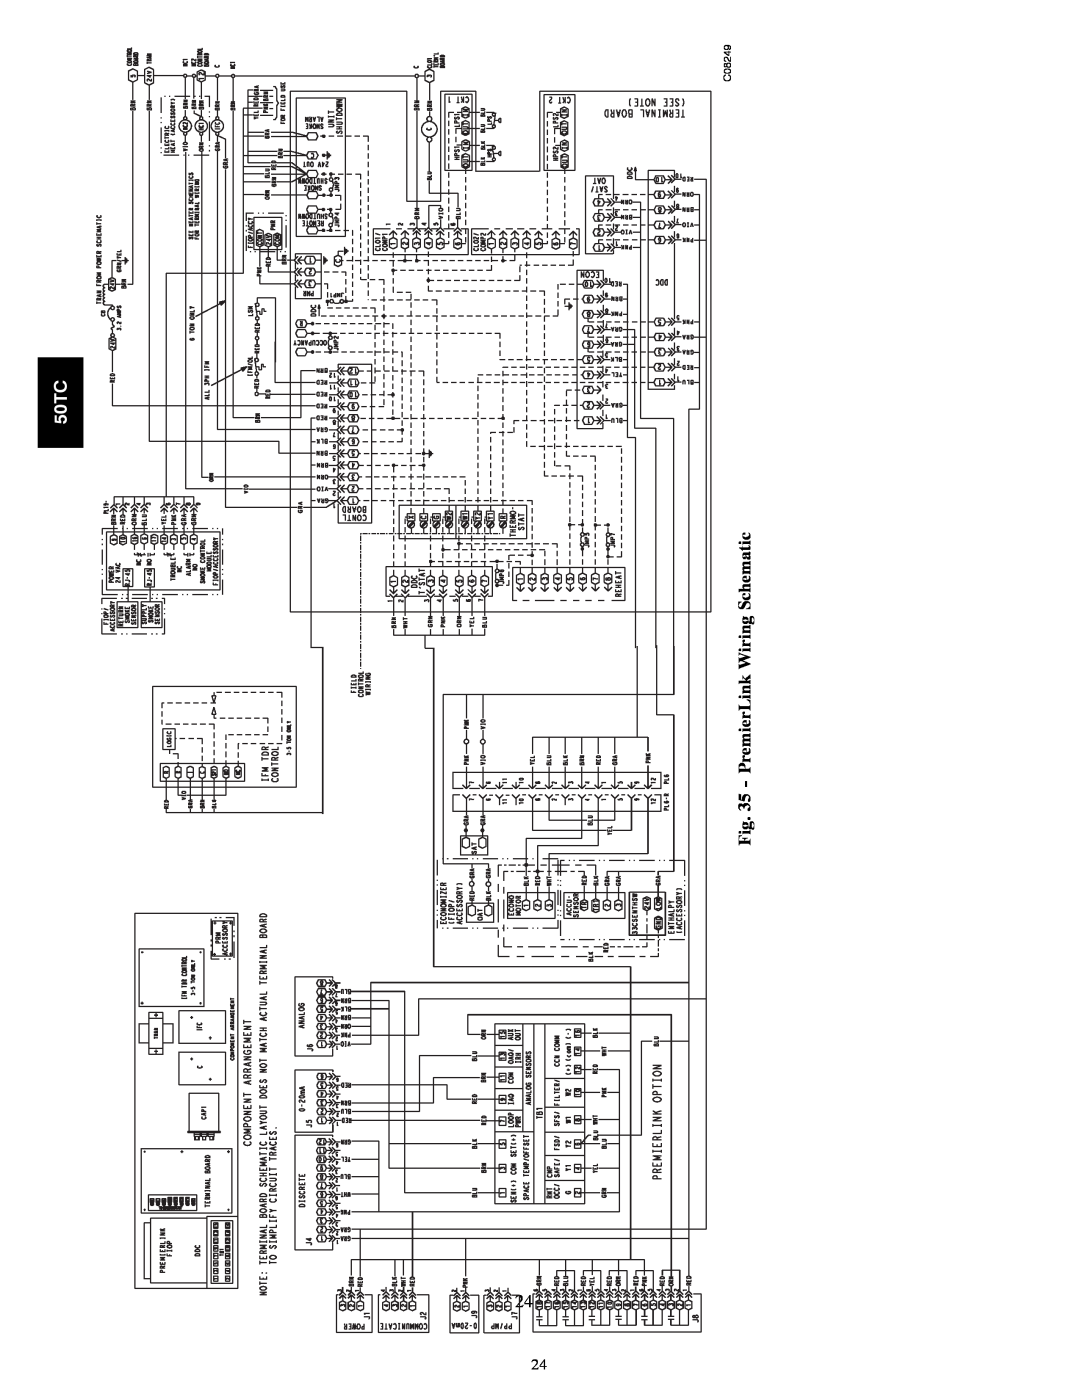 Carrier 50TCA04-A07 appendix PremierLink Wiring Schematic, C08249 